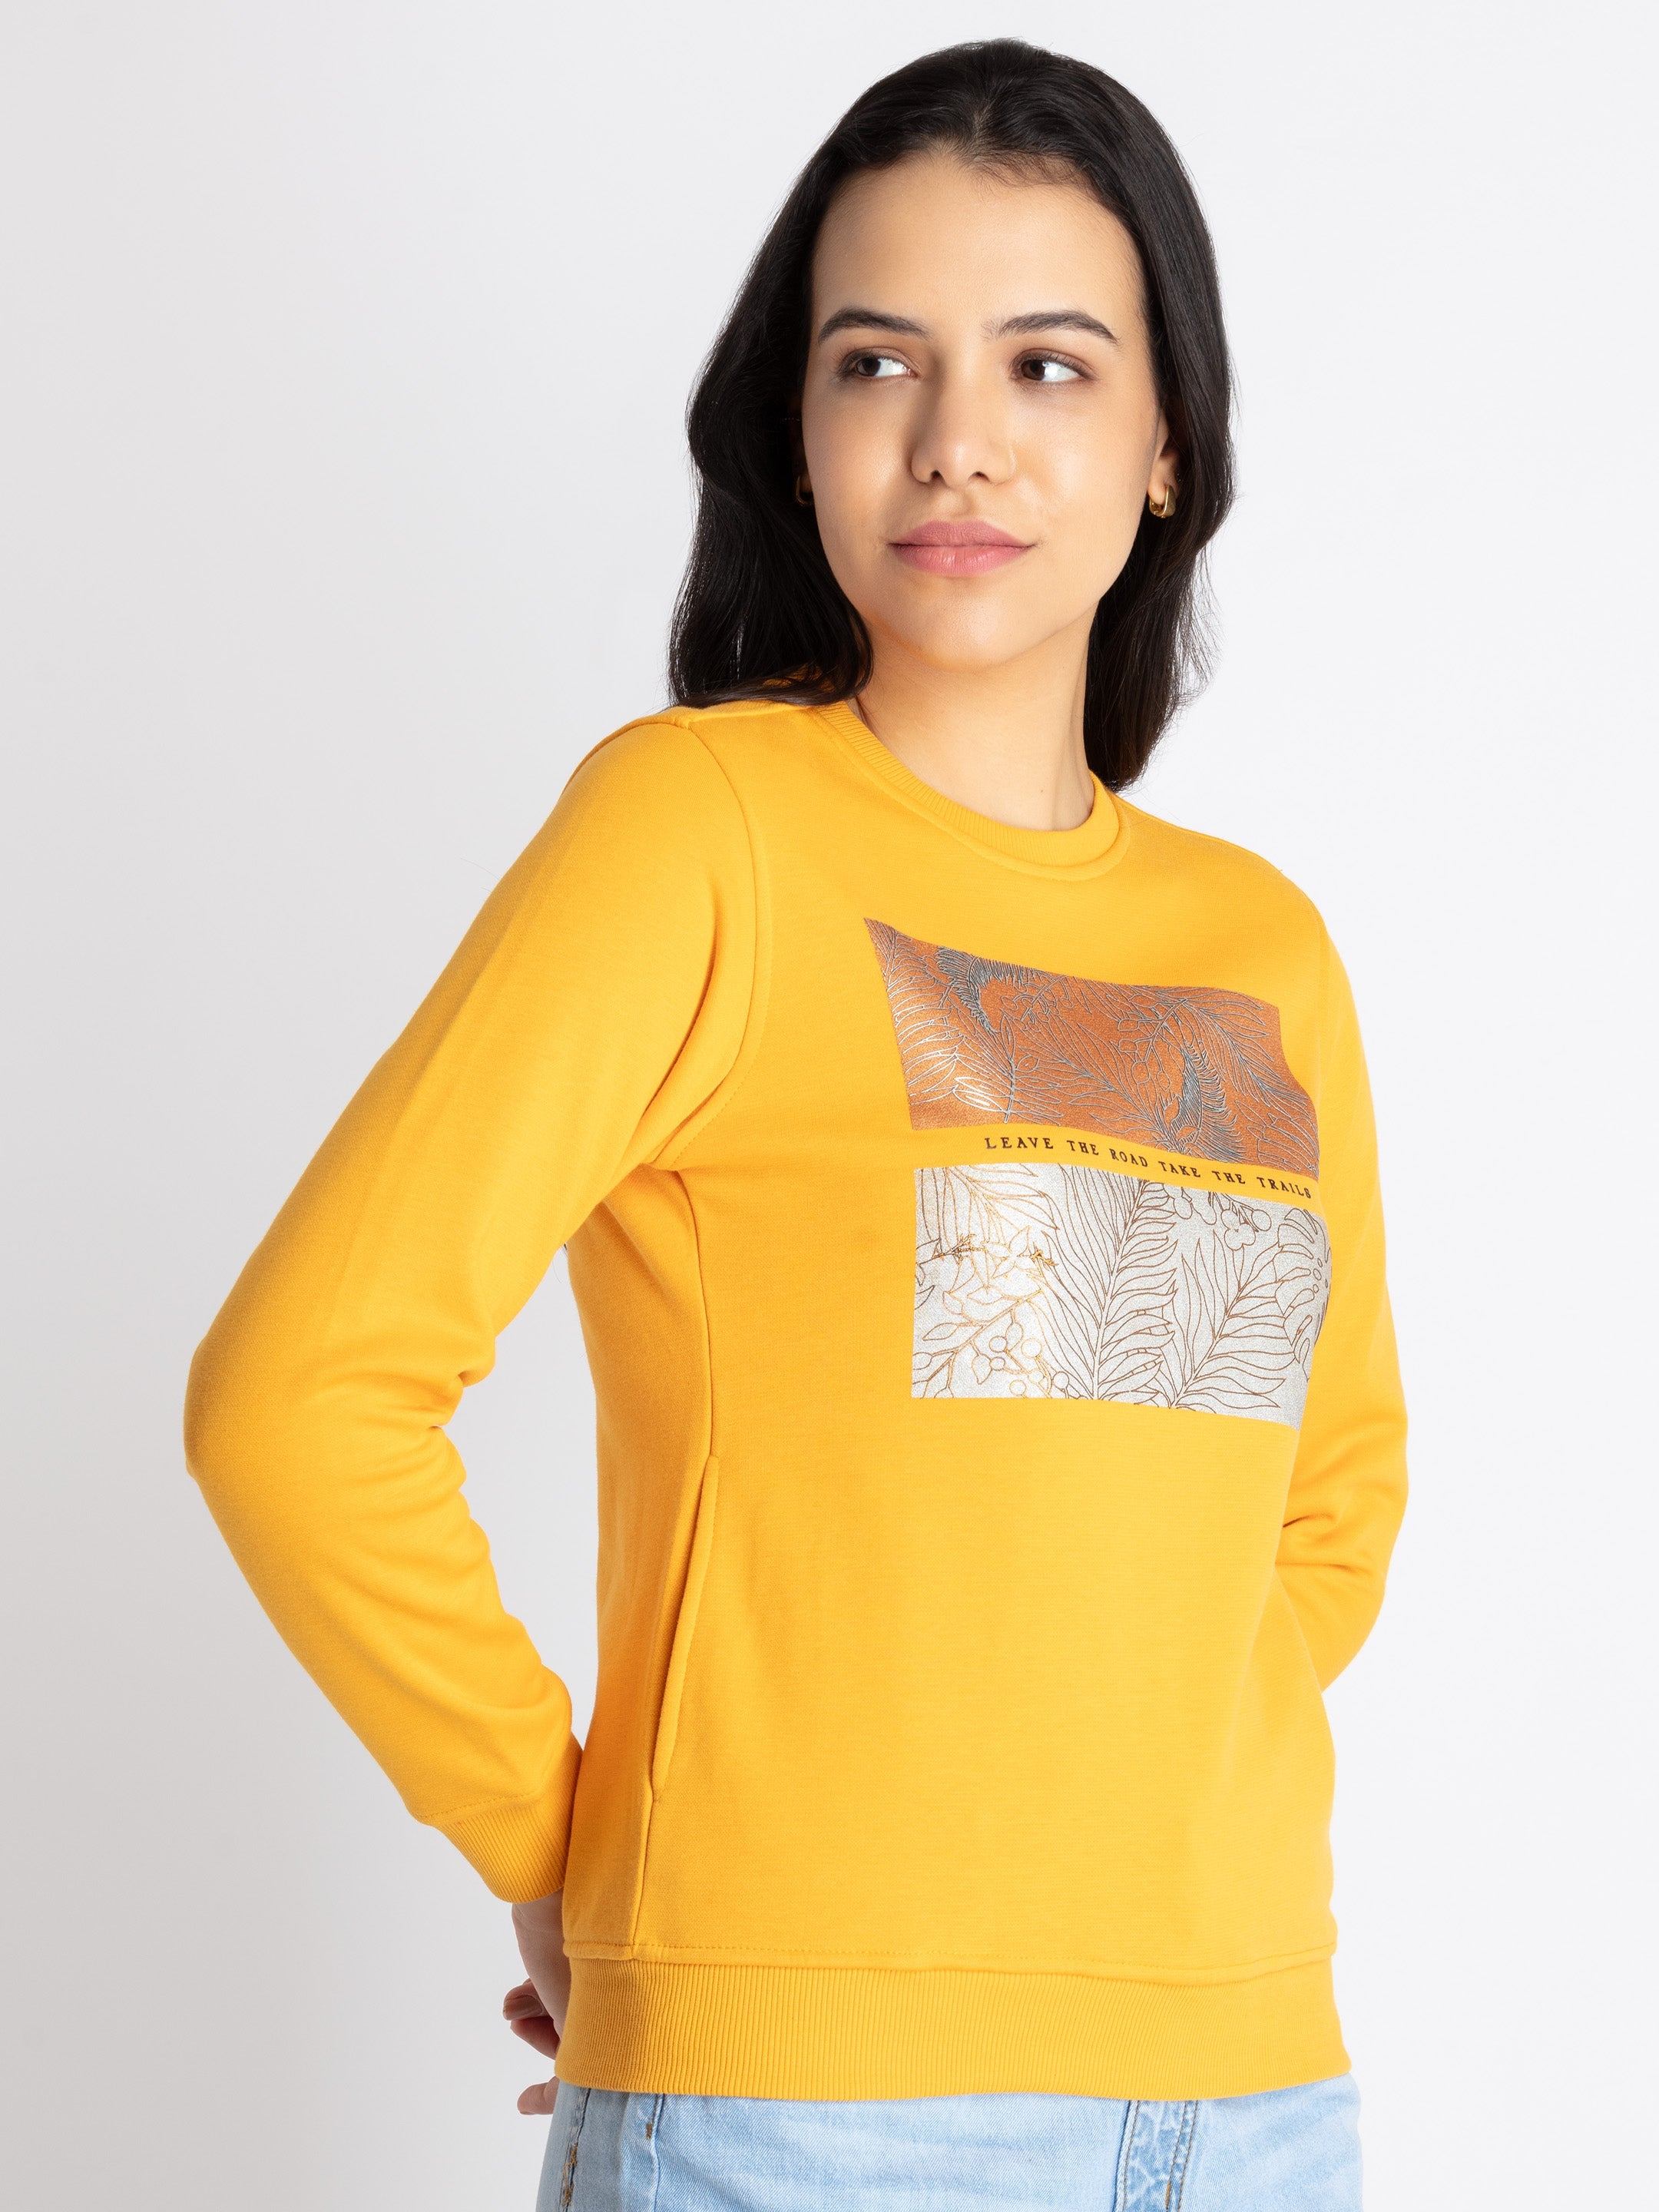 printed sweatshirt for women